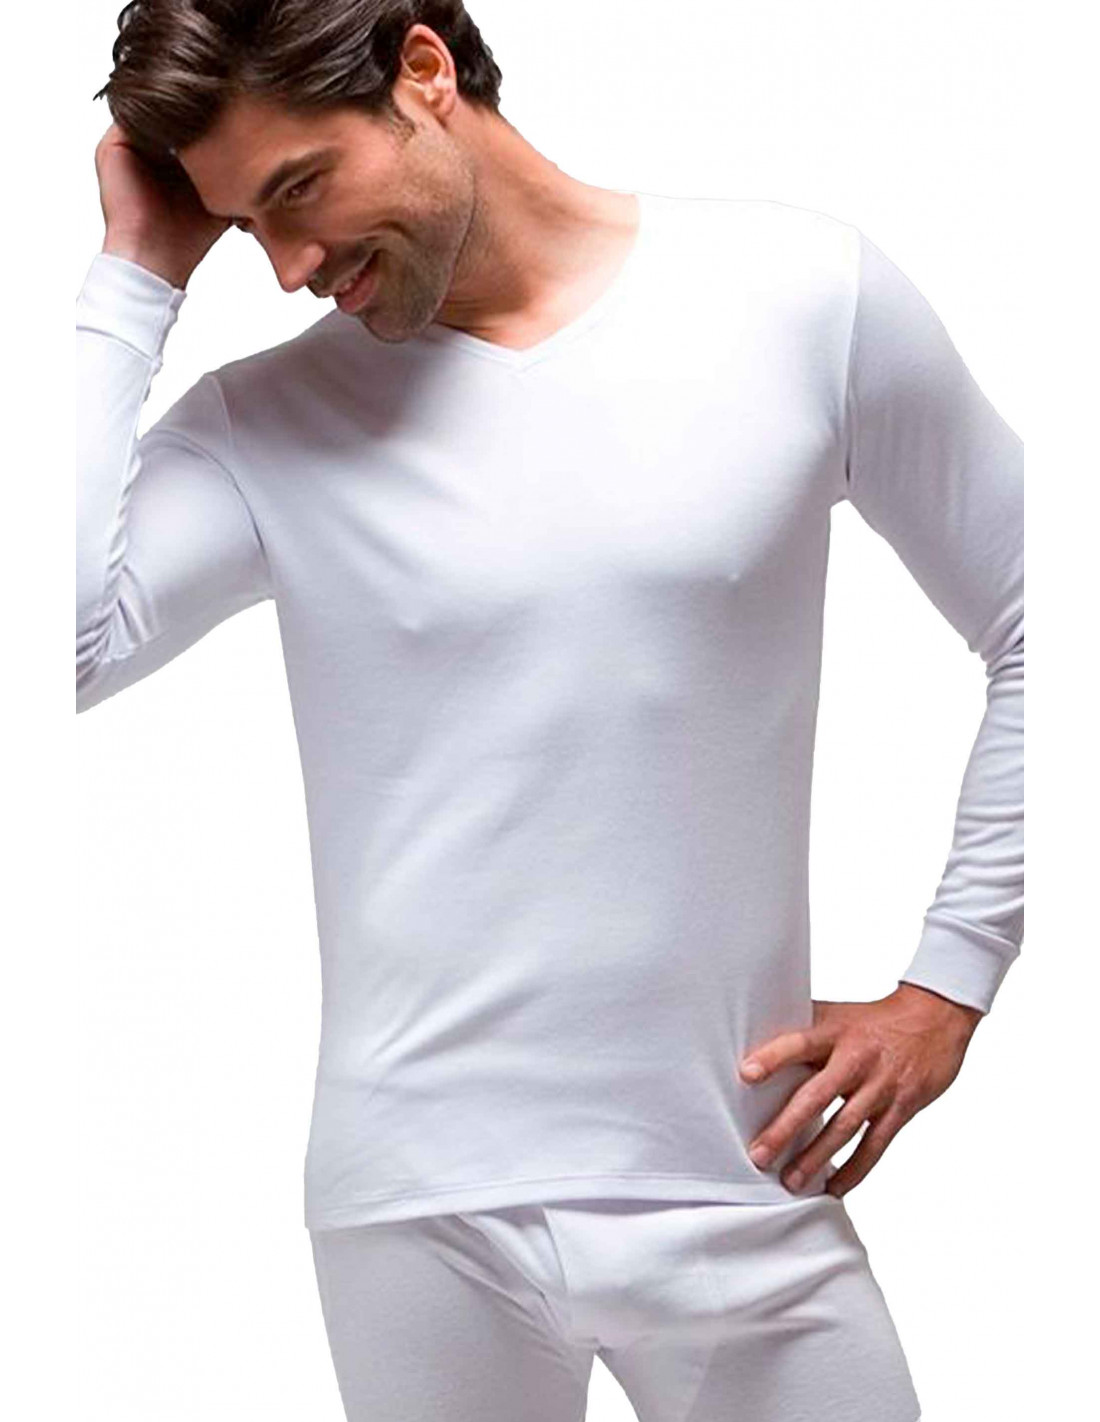 Camiseta interior termal niña manga corta 360 de Rapife